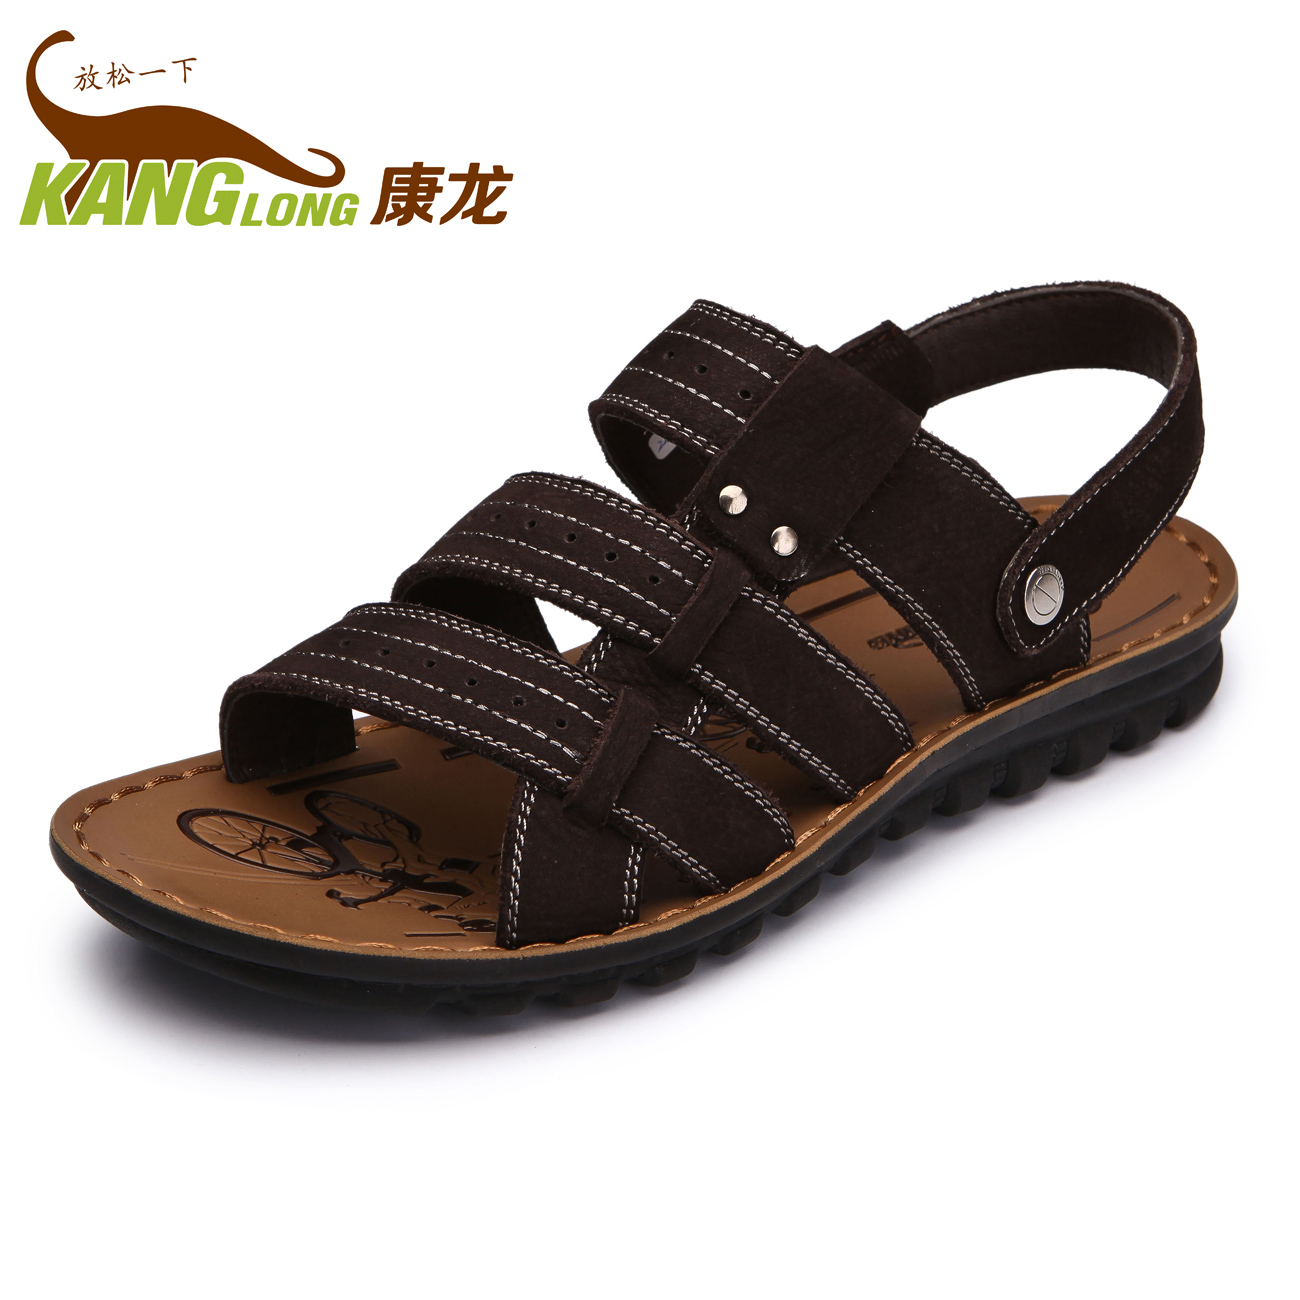 Long casual men's sandals leather sandals male sandals male models ...